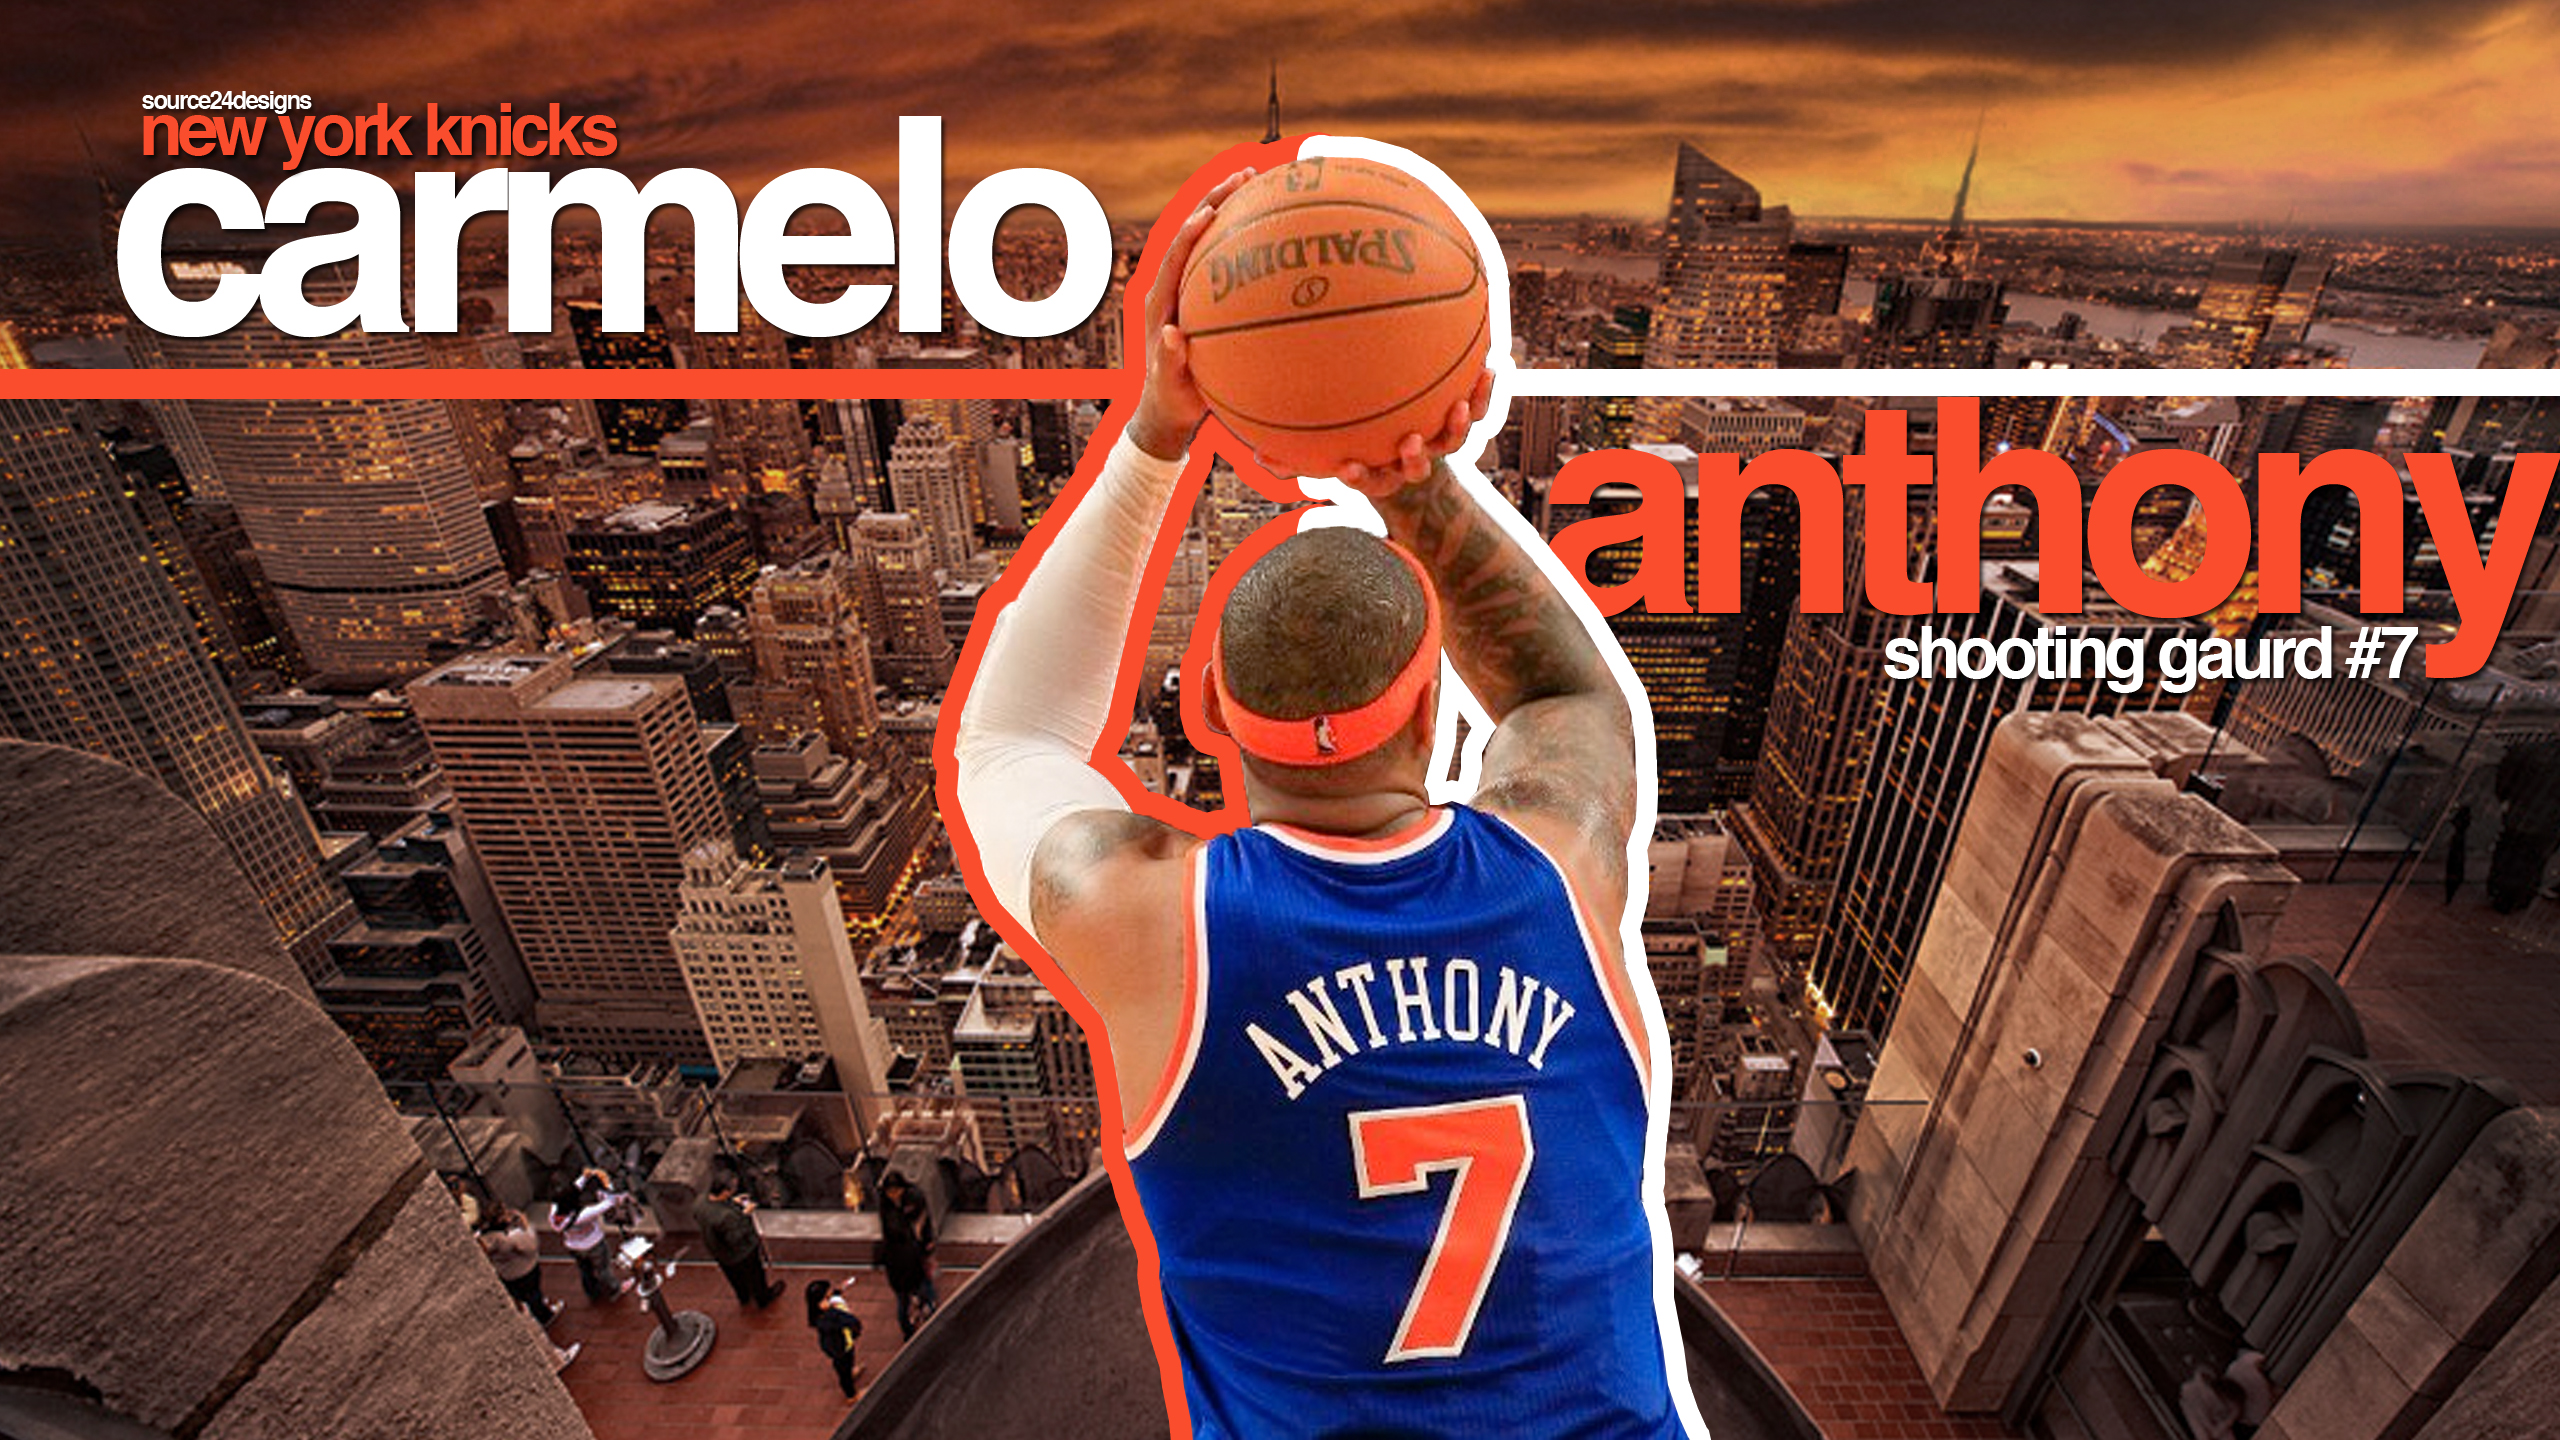 Carmelo Anthony Knicks Wallpaper